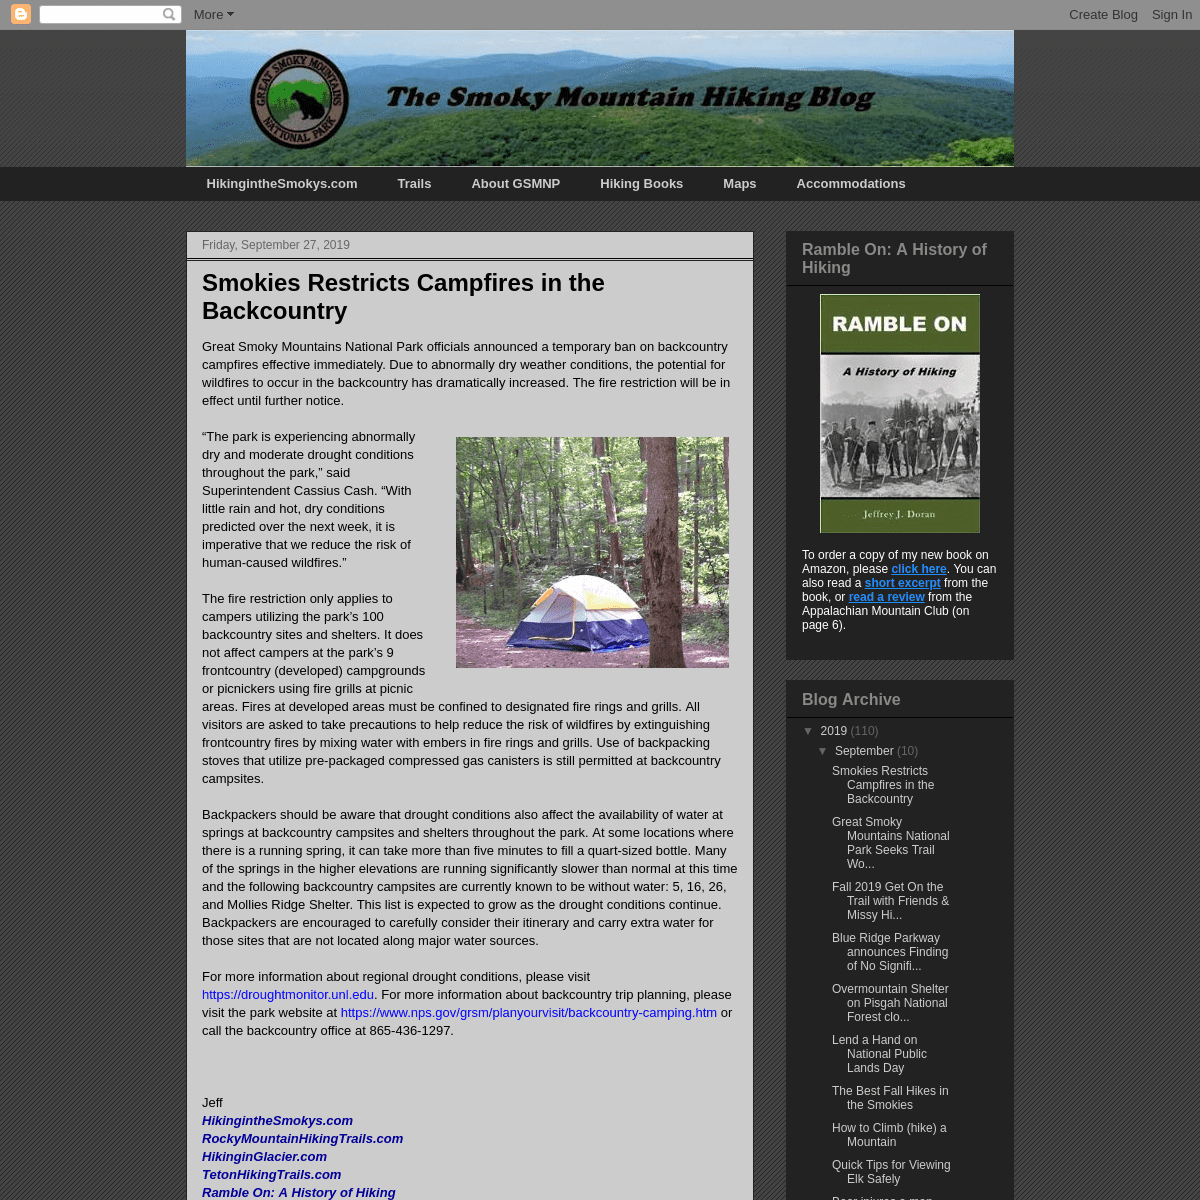 The Smoky Mountain Hiking Blog